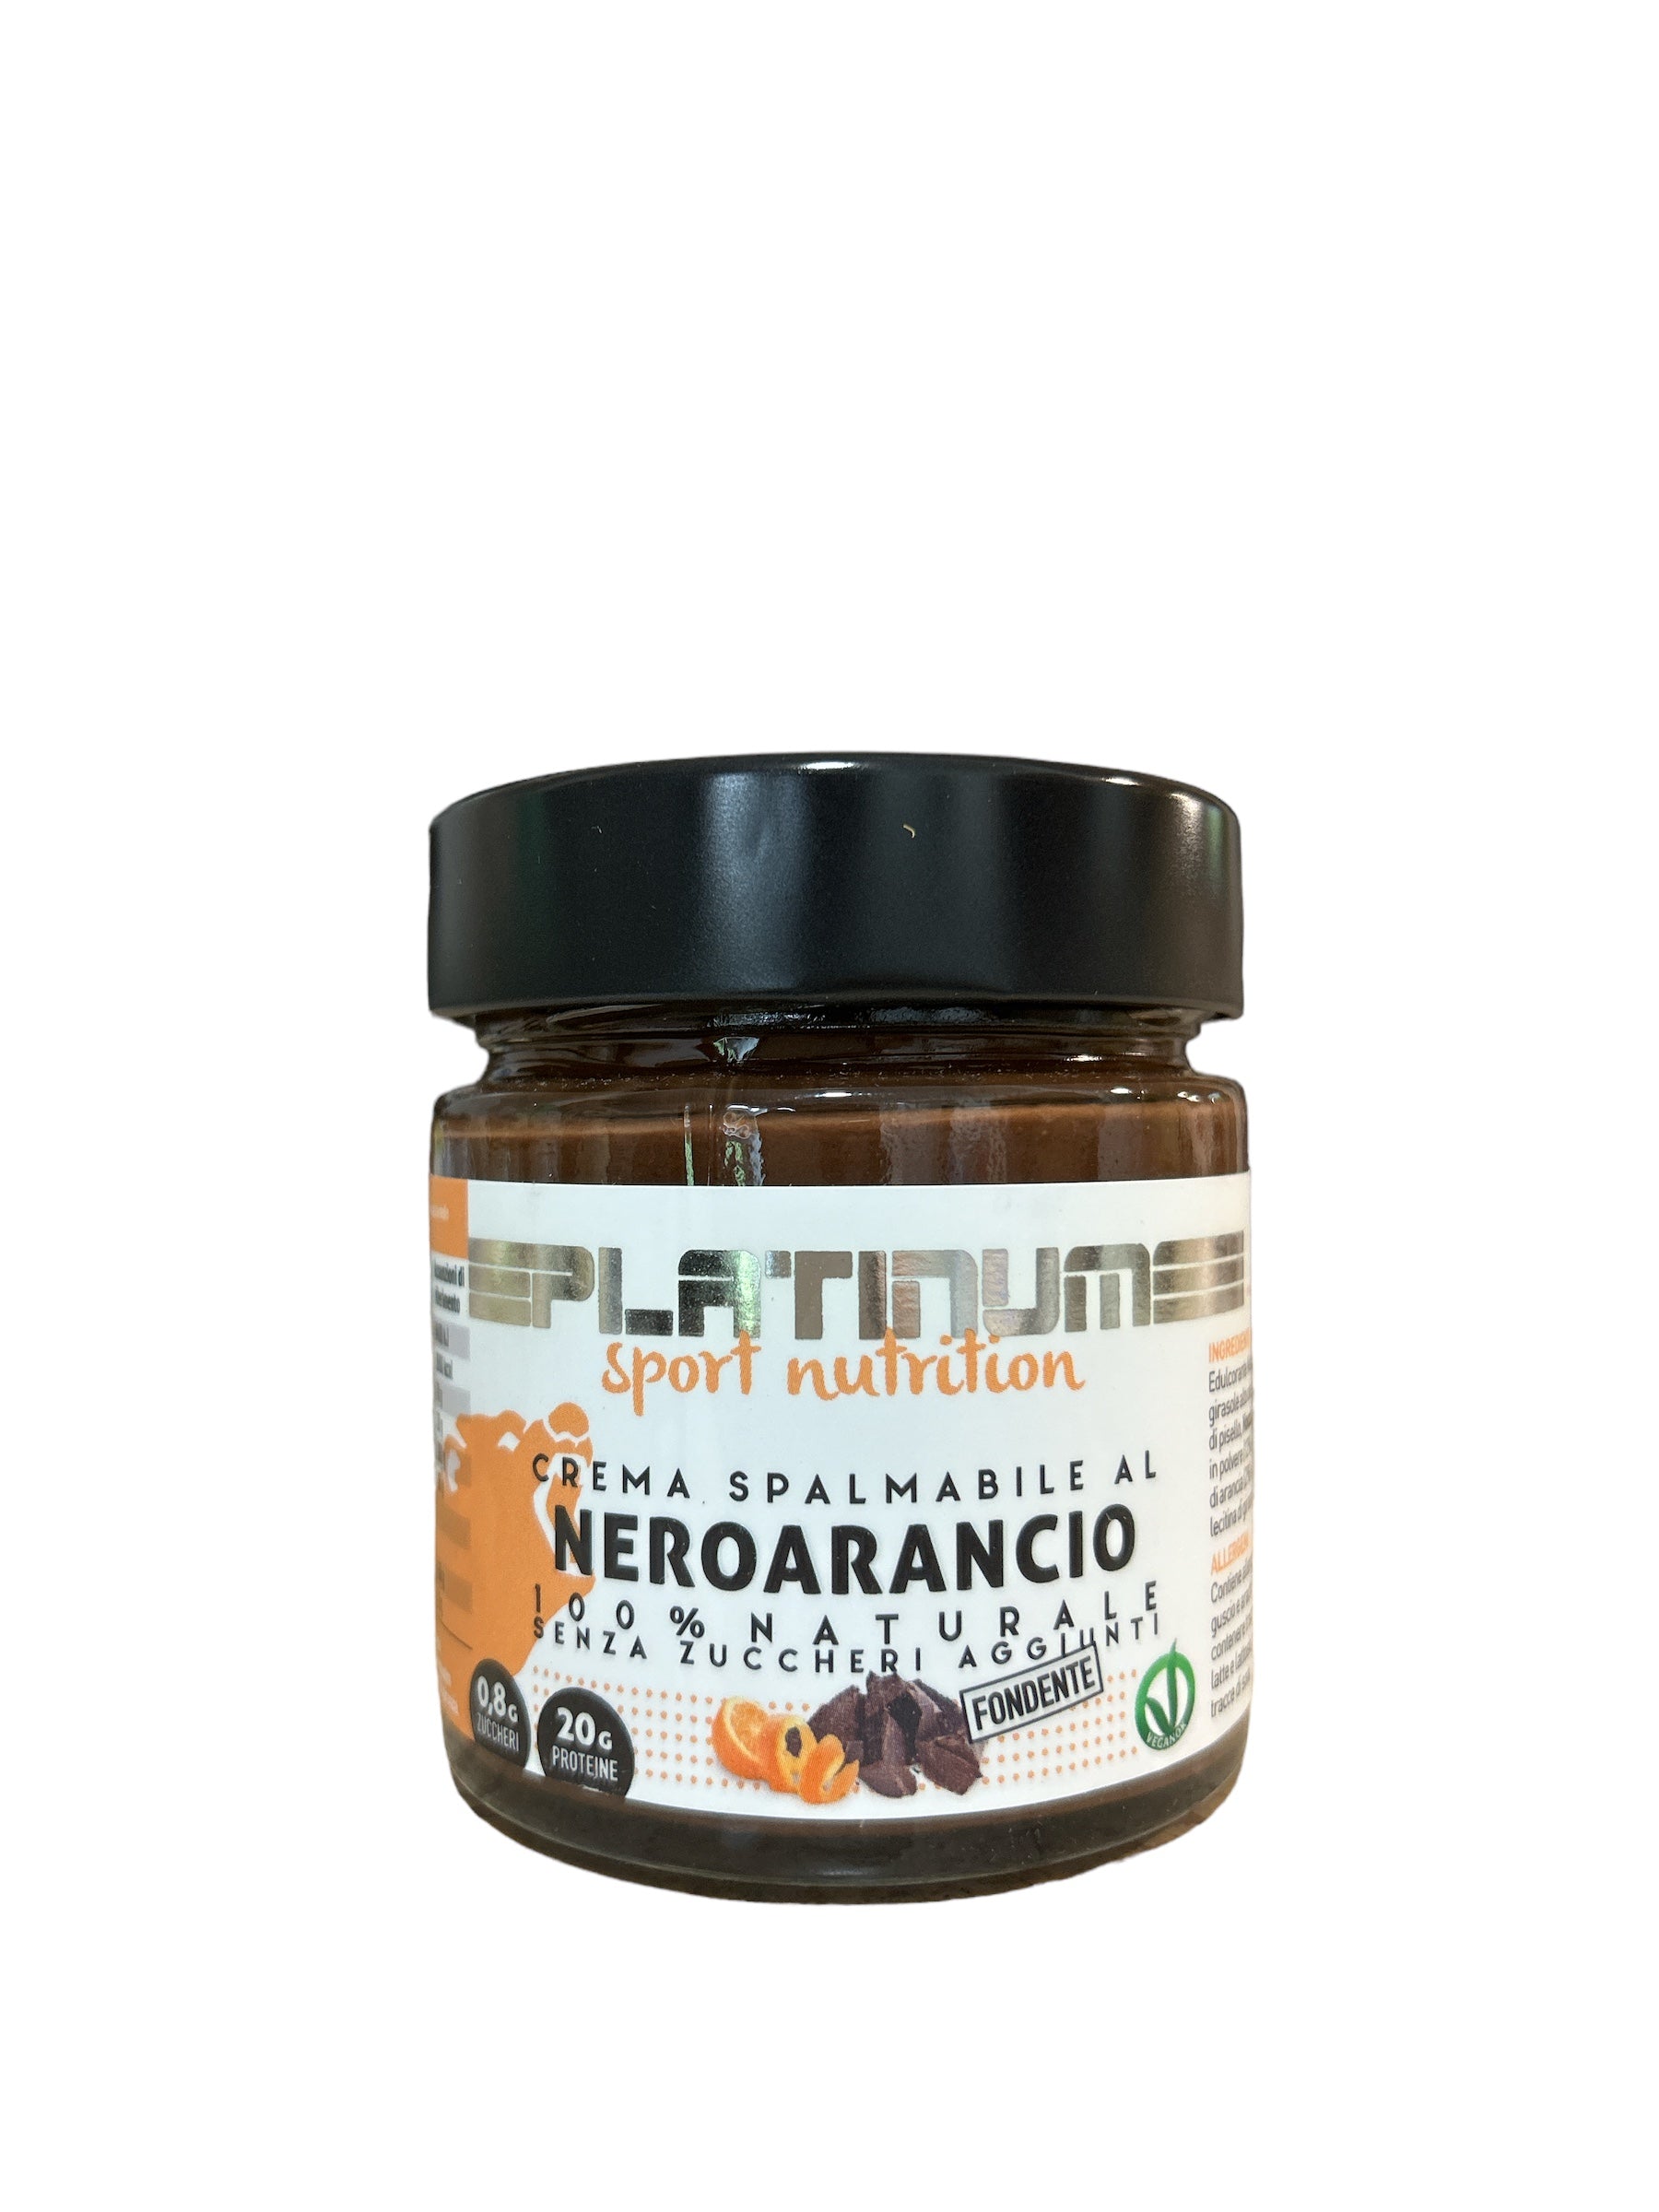 PLATINUM SPORT NUTRITION - Crema Proteica Spalmabile gusto NERO ARANCIO 250g Vegan